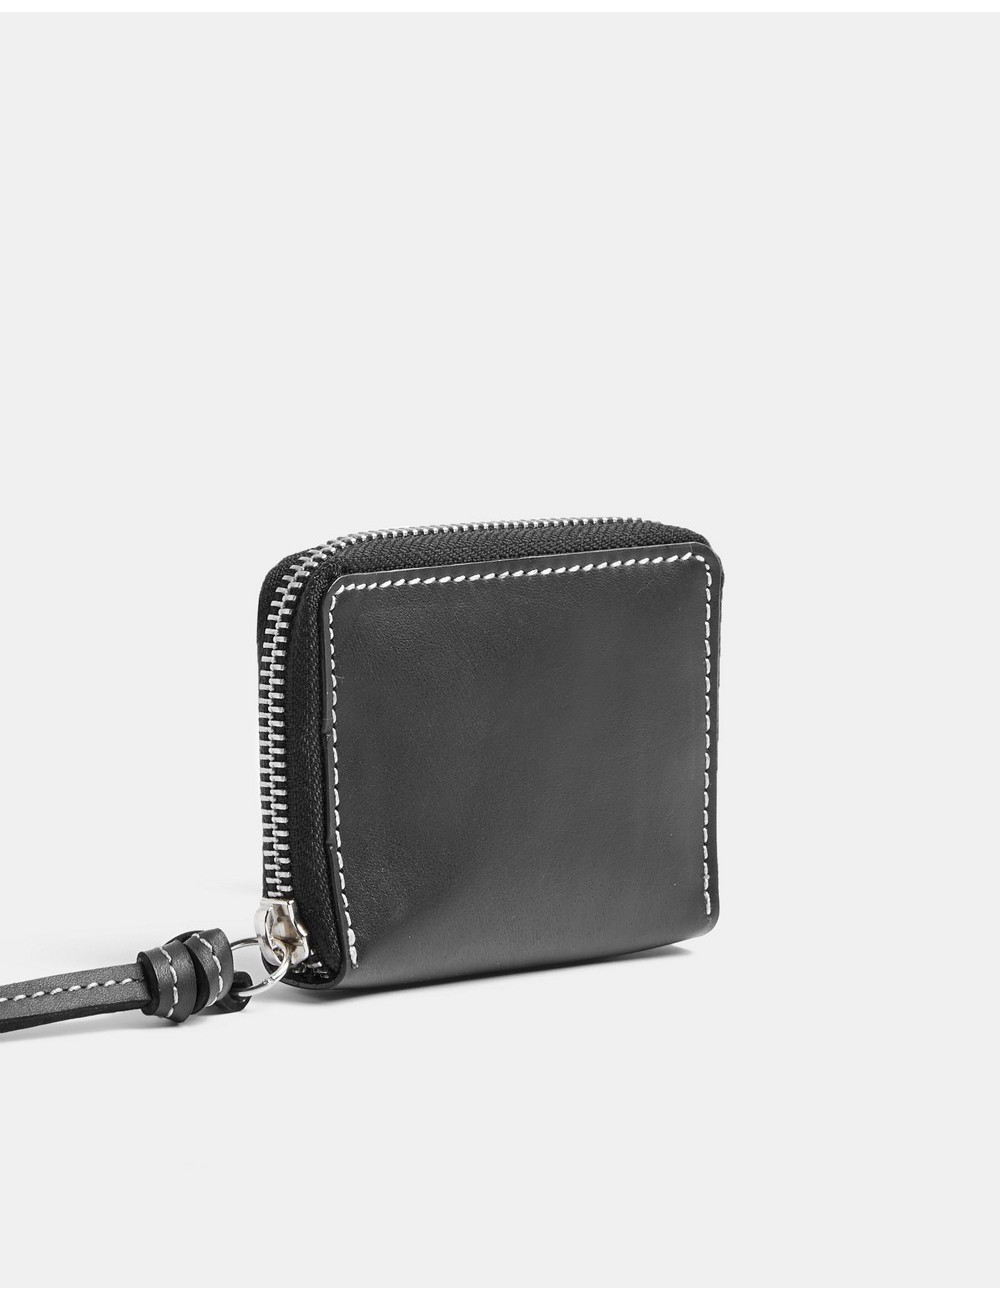 Topshop leather zip purse...